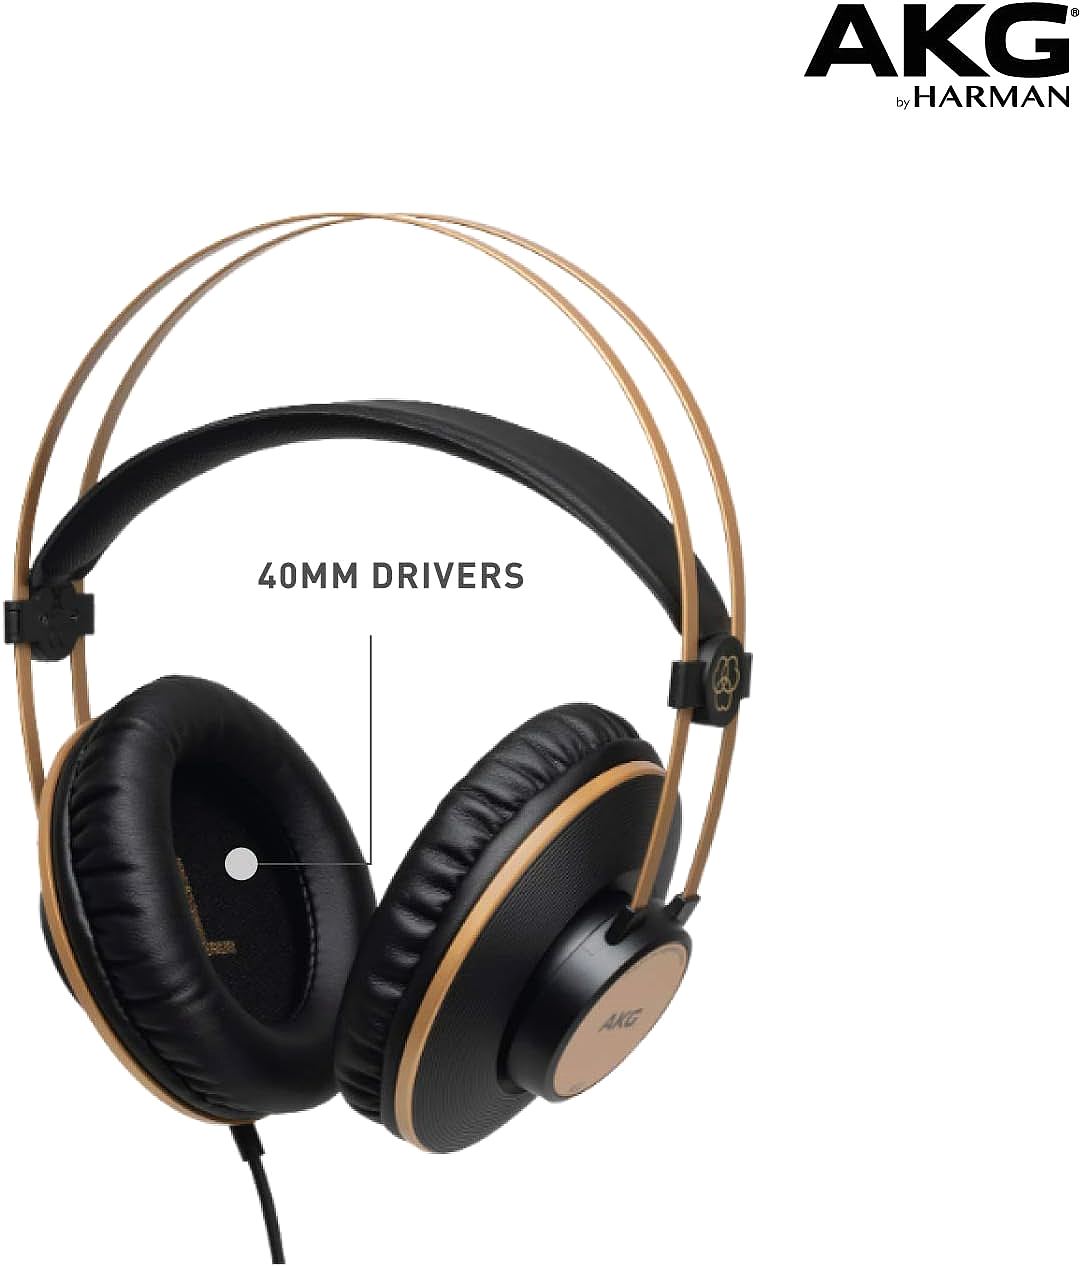   AKG Pro Audio K92 Over-Ear Headphones  